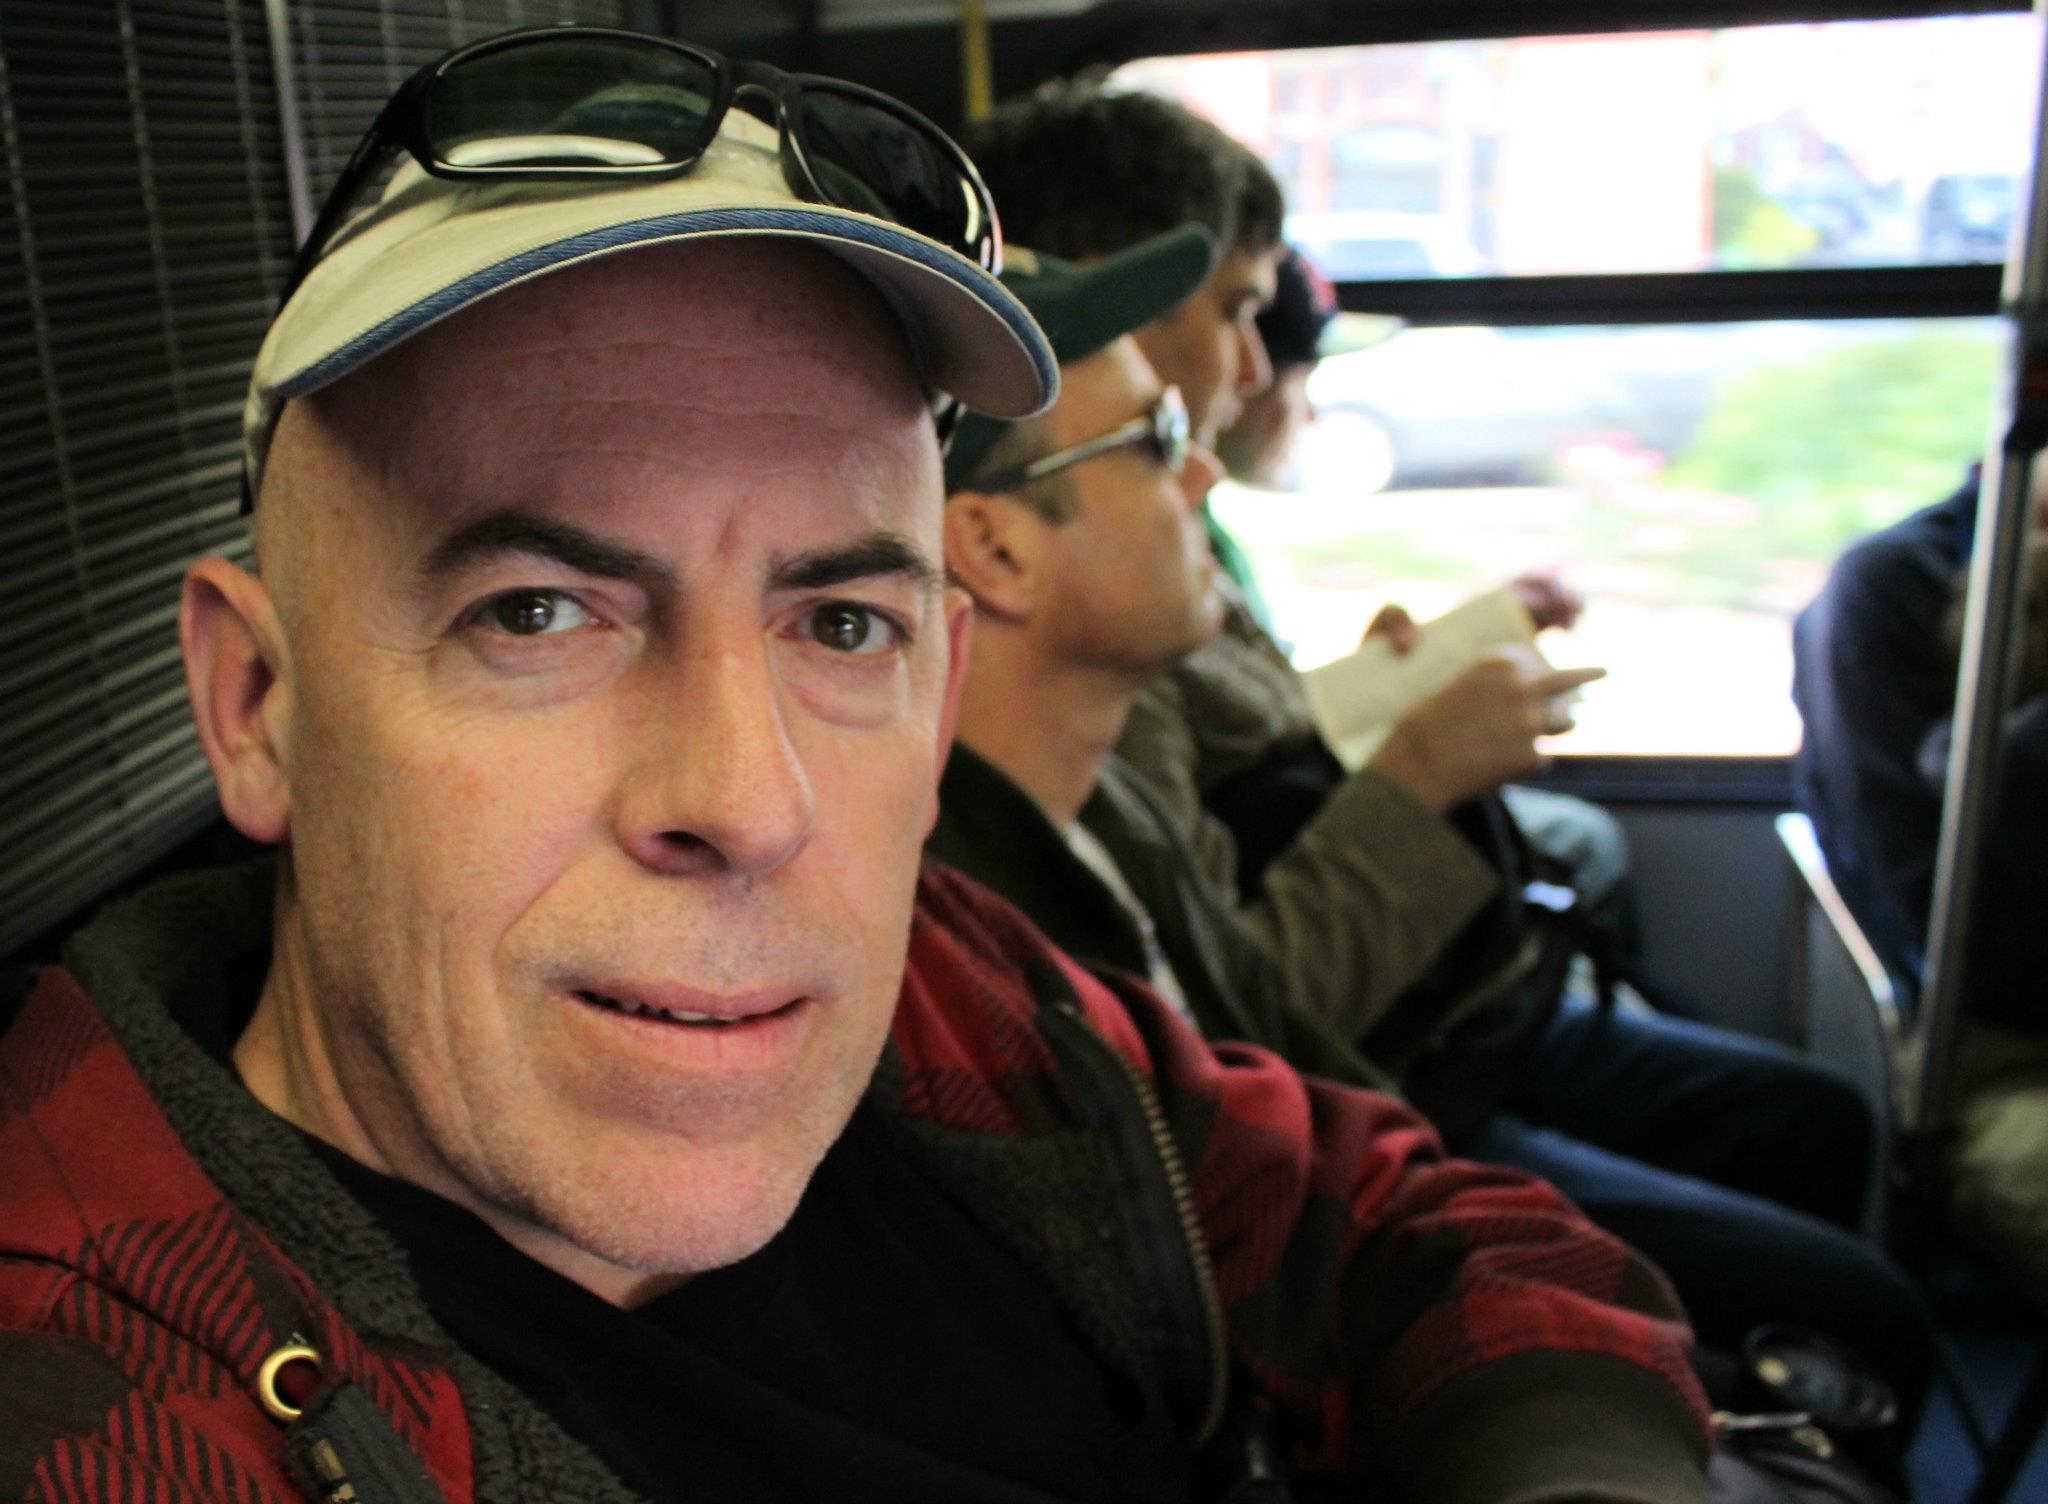 On the bus in Cambridge, Mass, April 2012. Glenn technically 